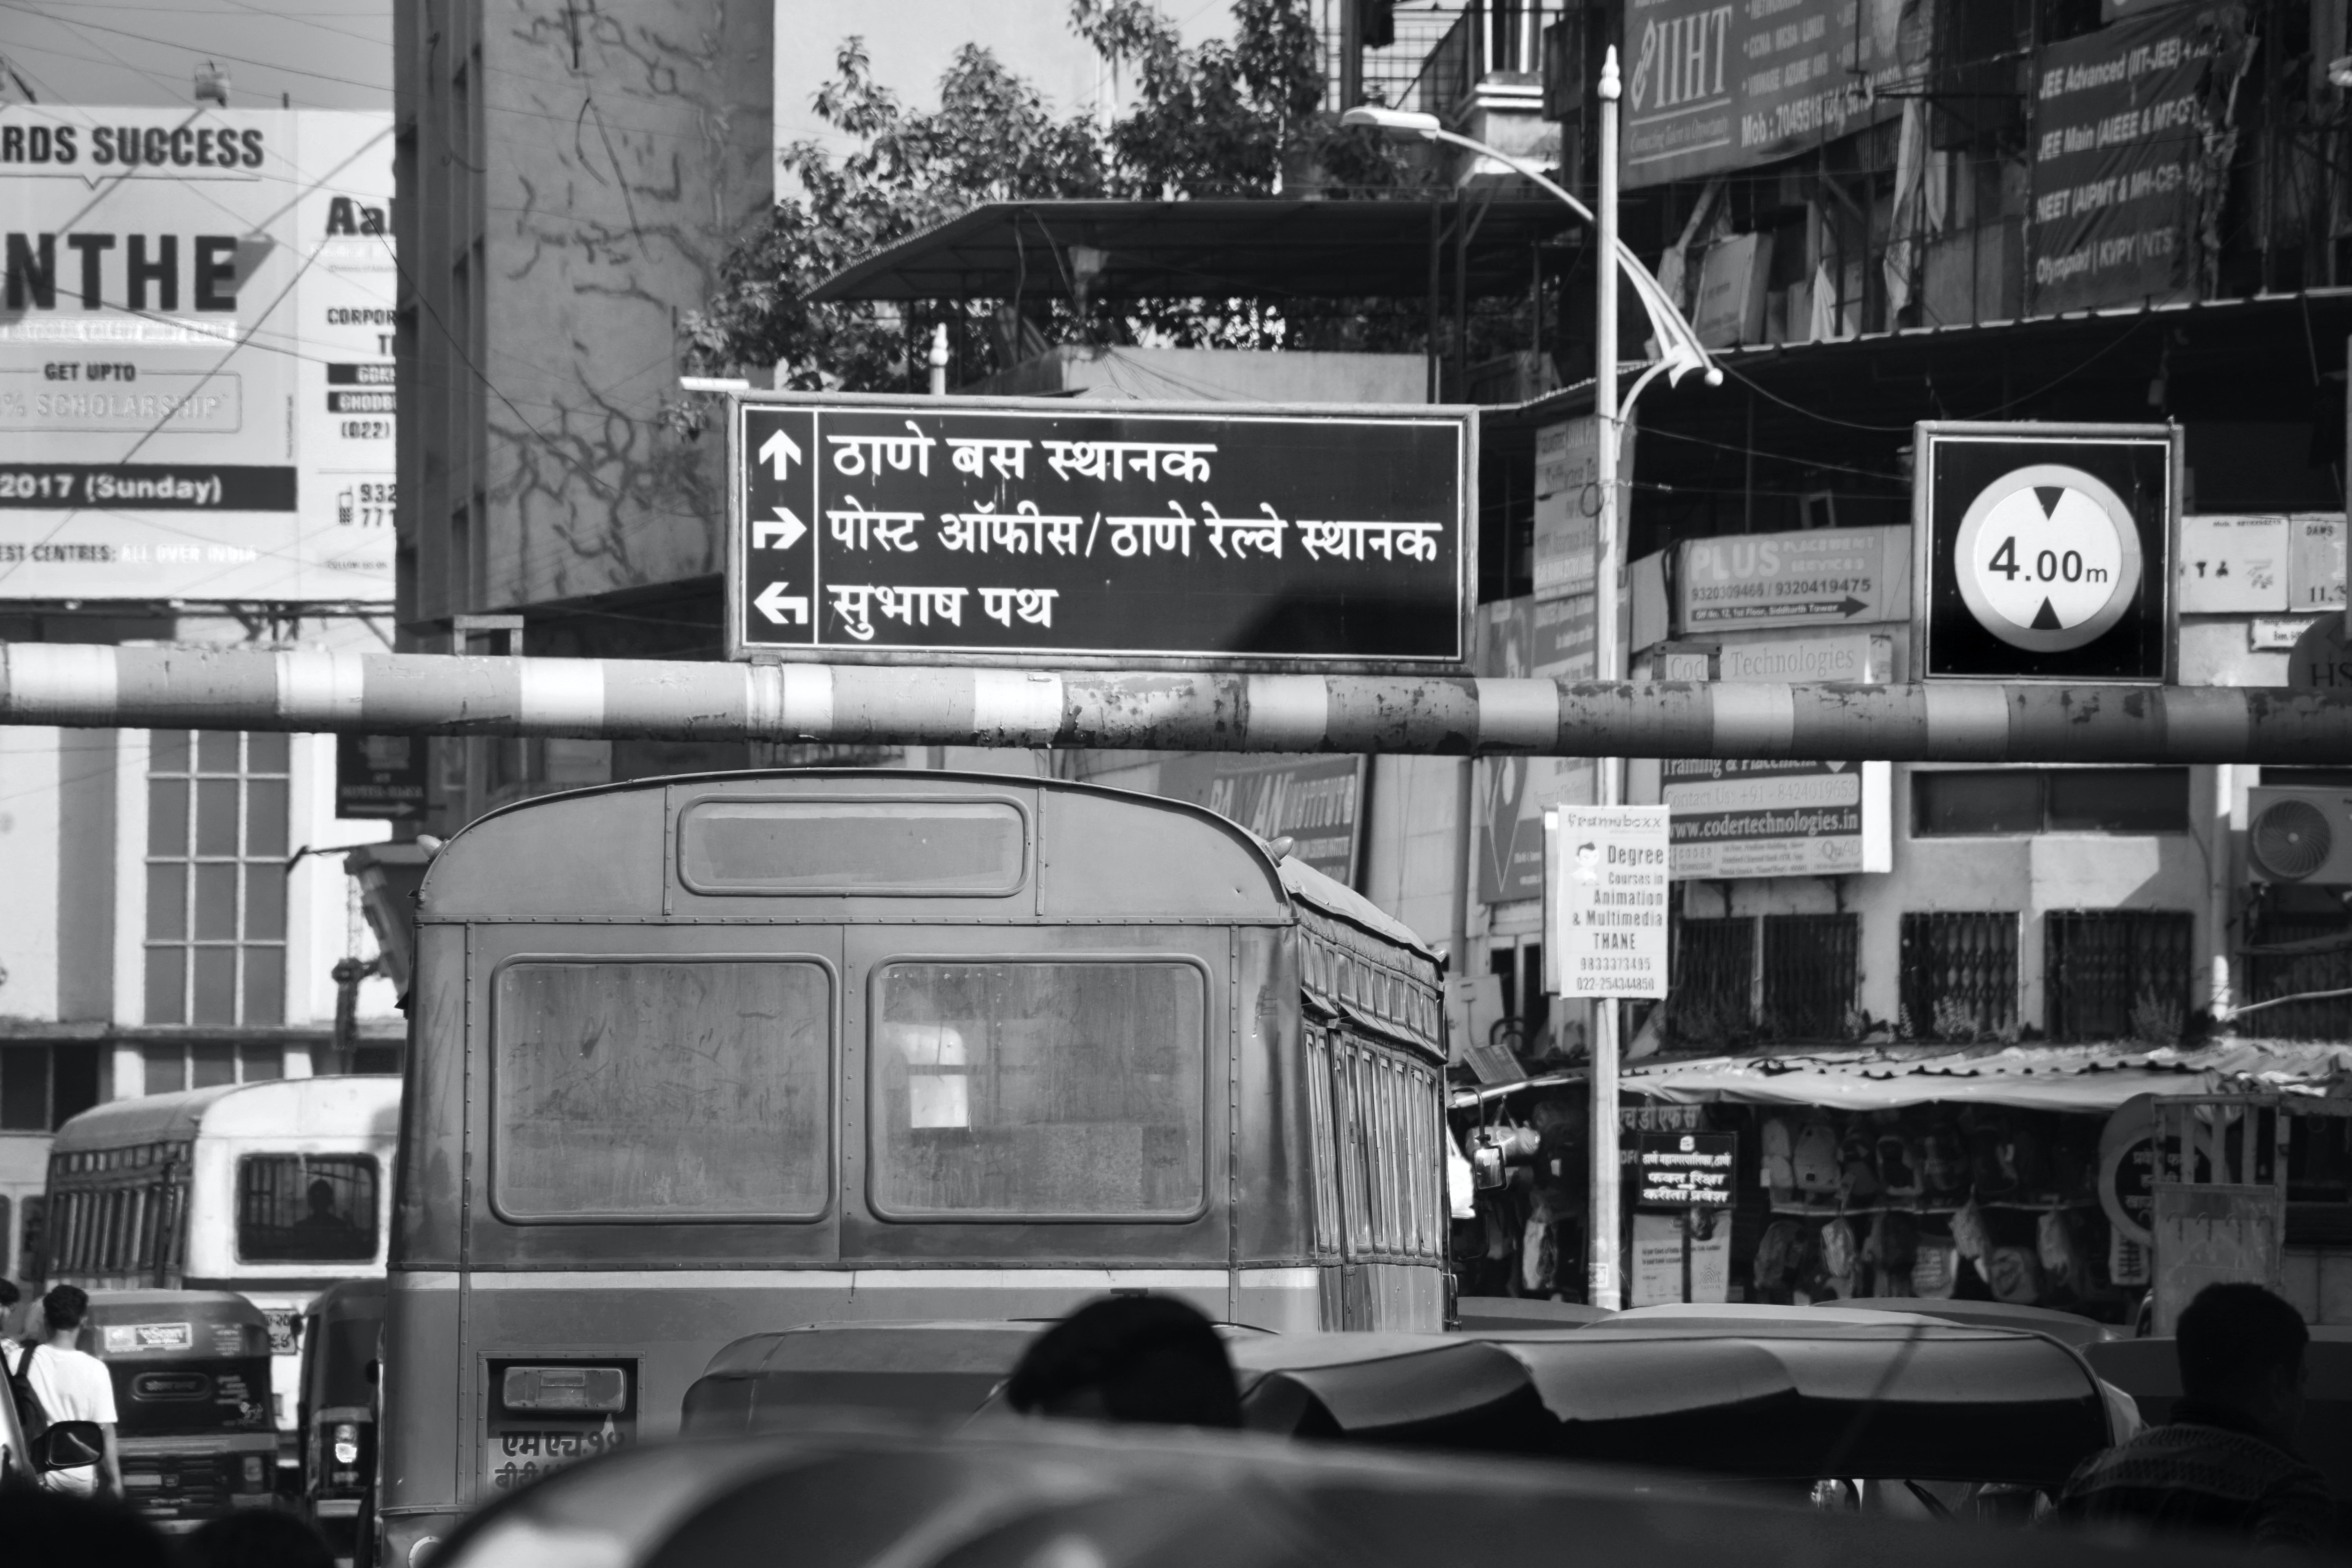 Banner image: A street in Mumbai, India / Credit: grayomm via Unsplash.